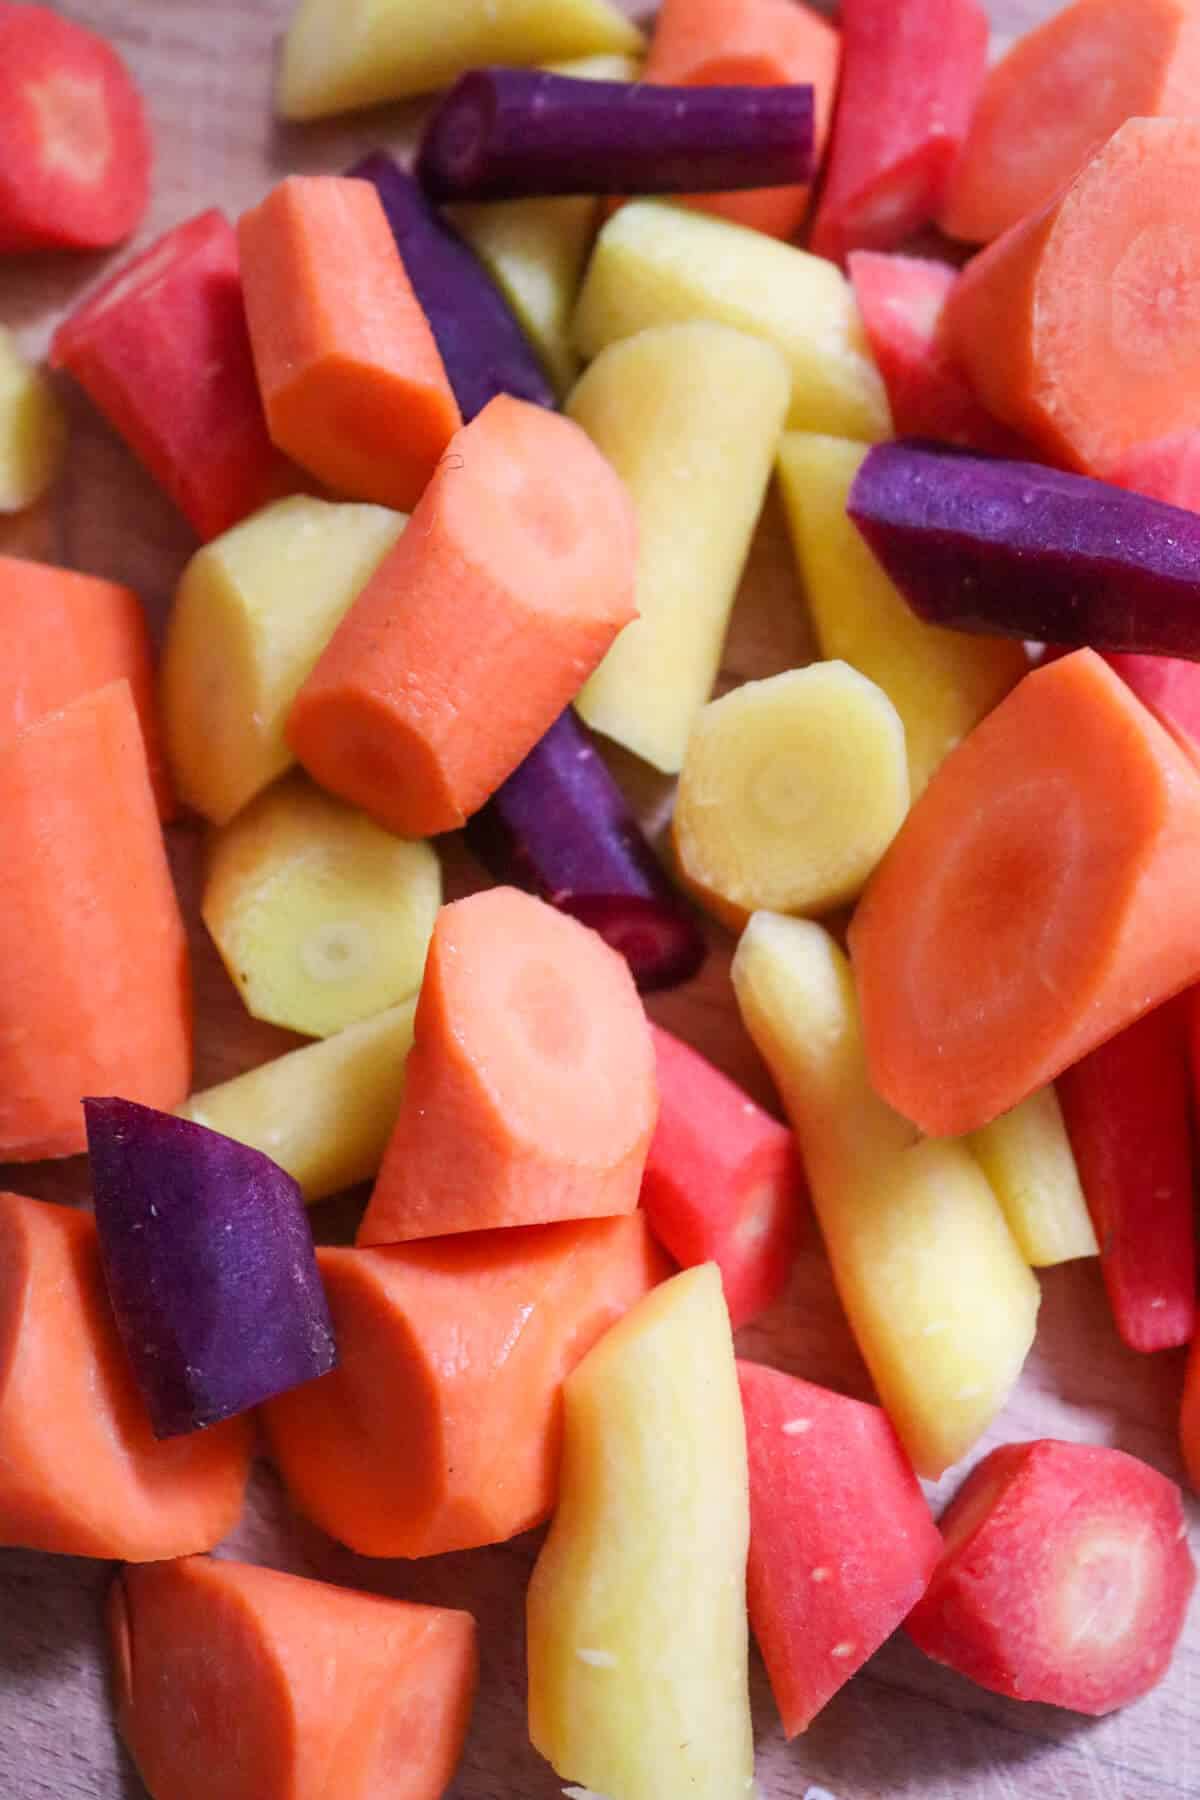 Rainbow carrots cut into pieces. 